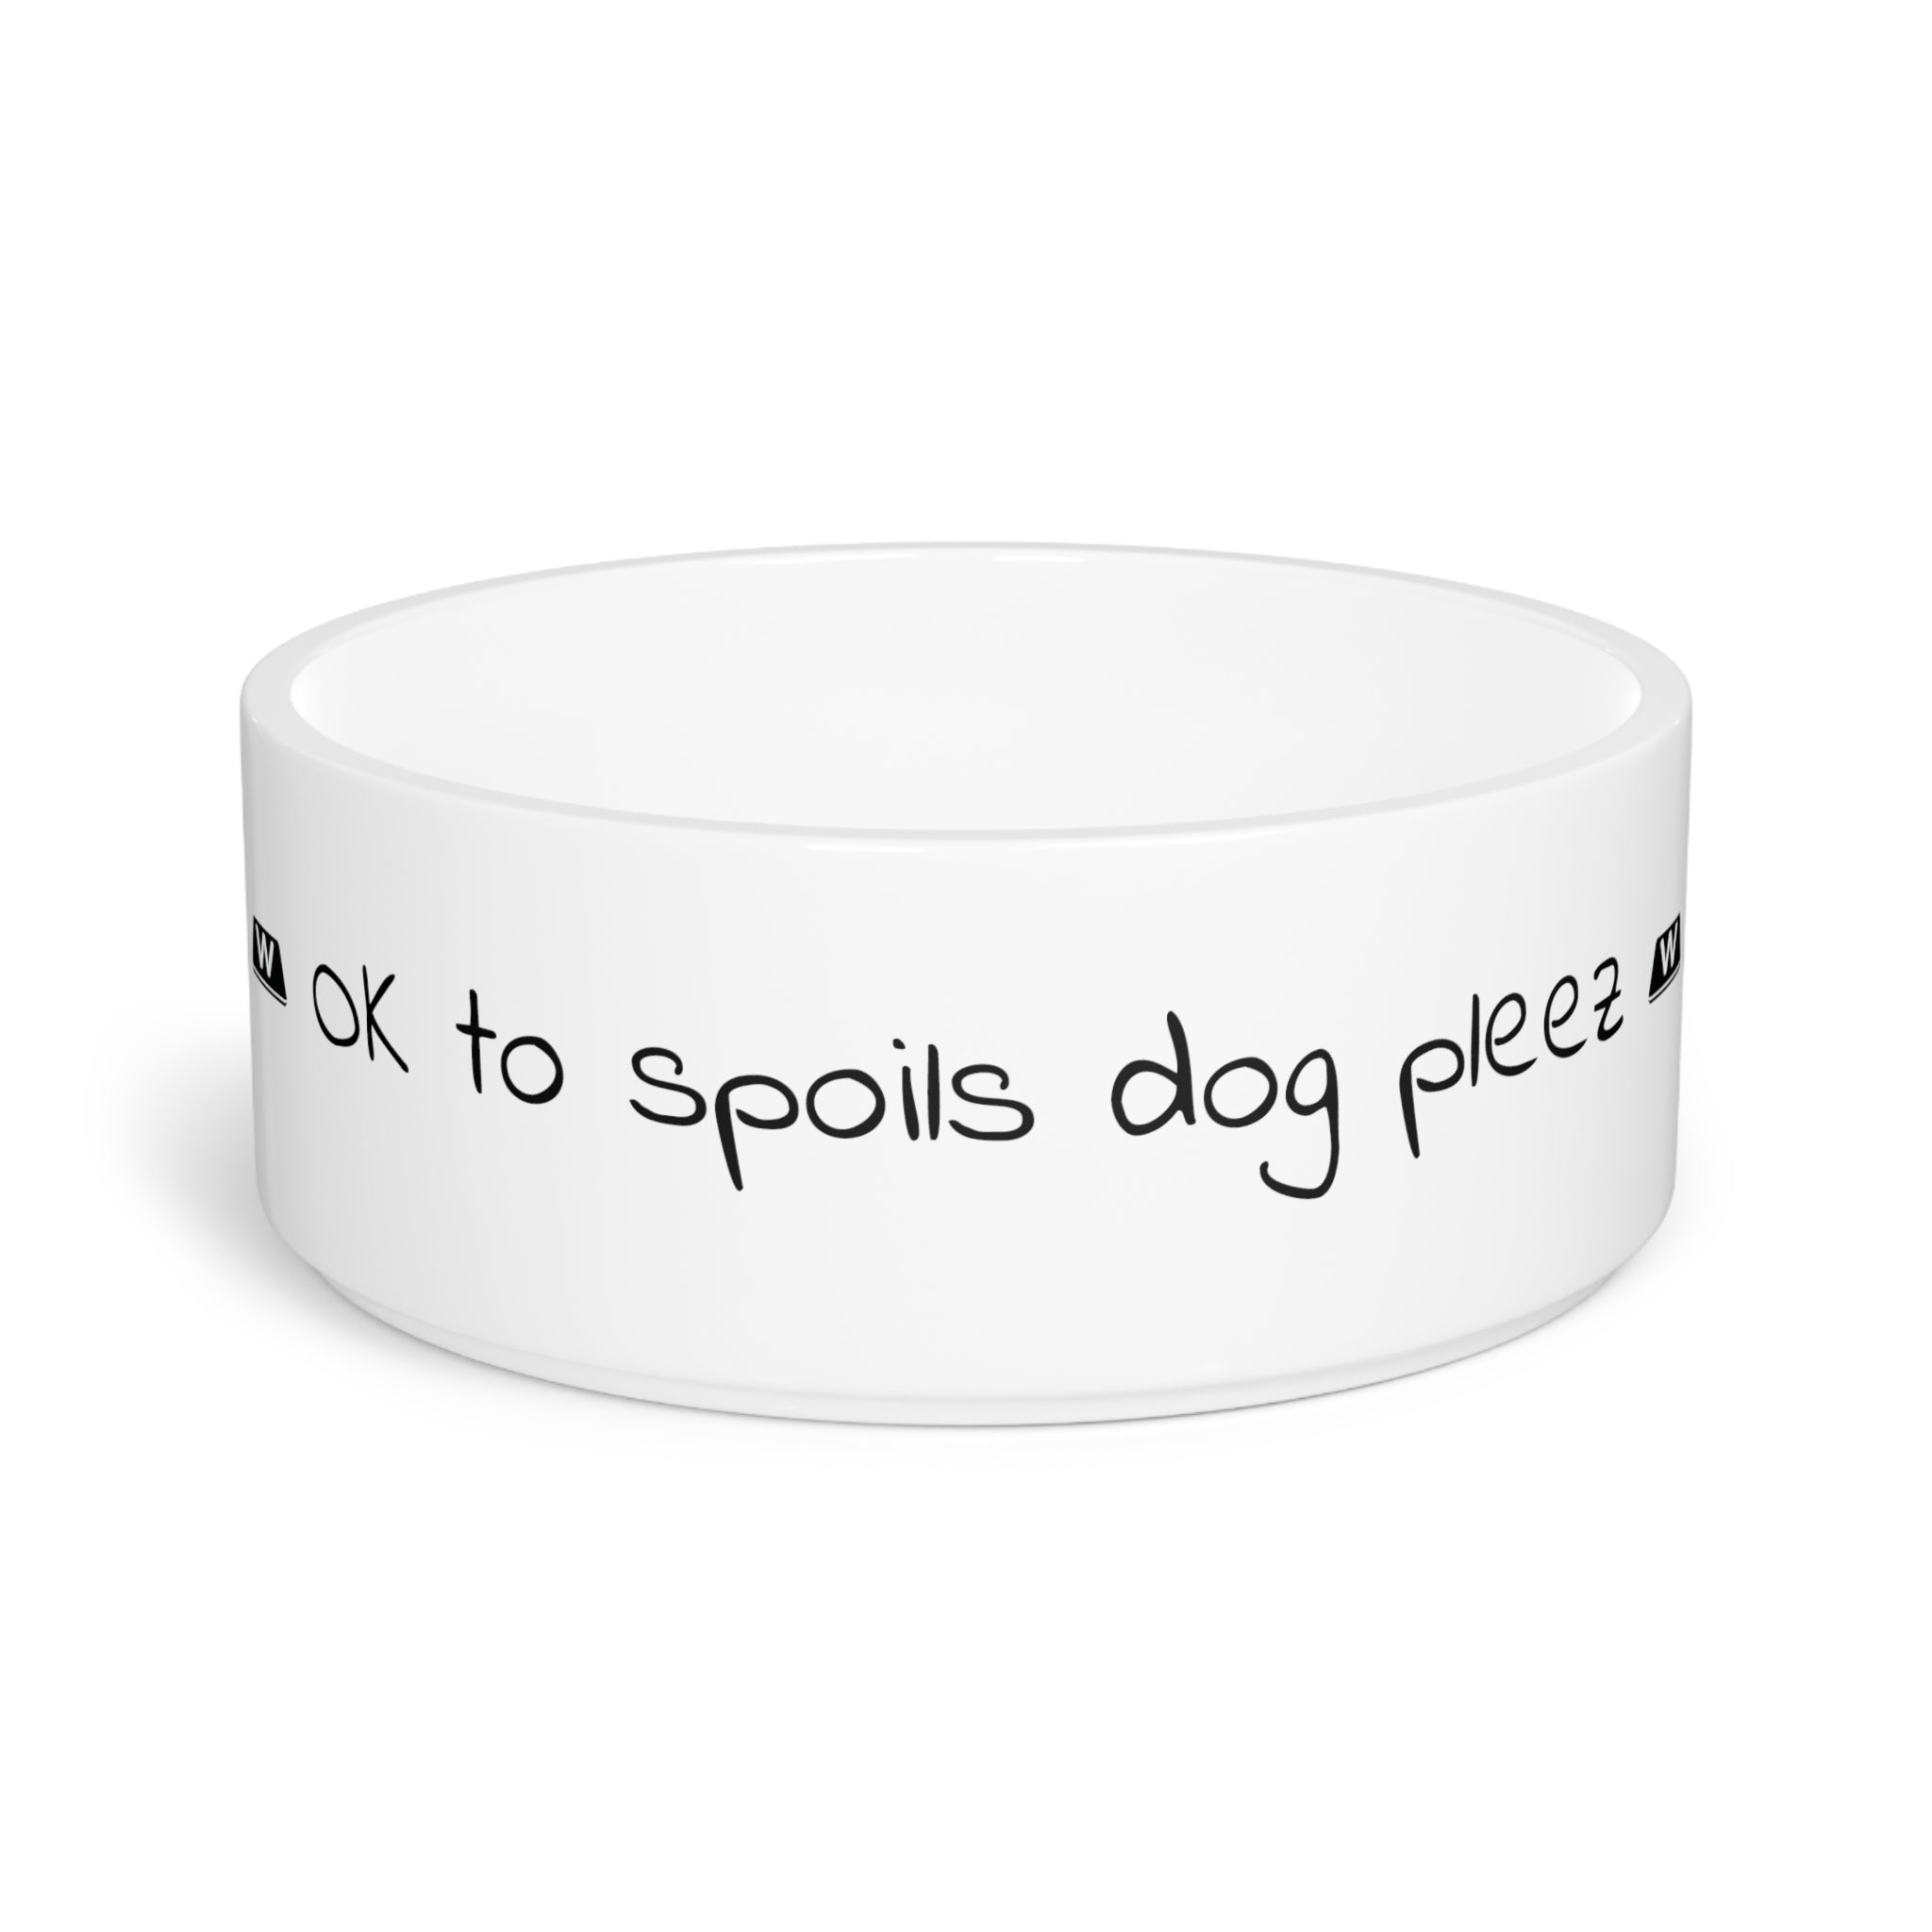 OK to spoils dog pleez - Pet Bowl